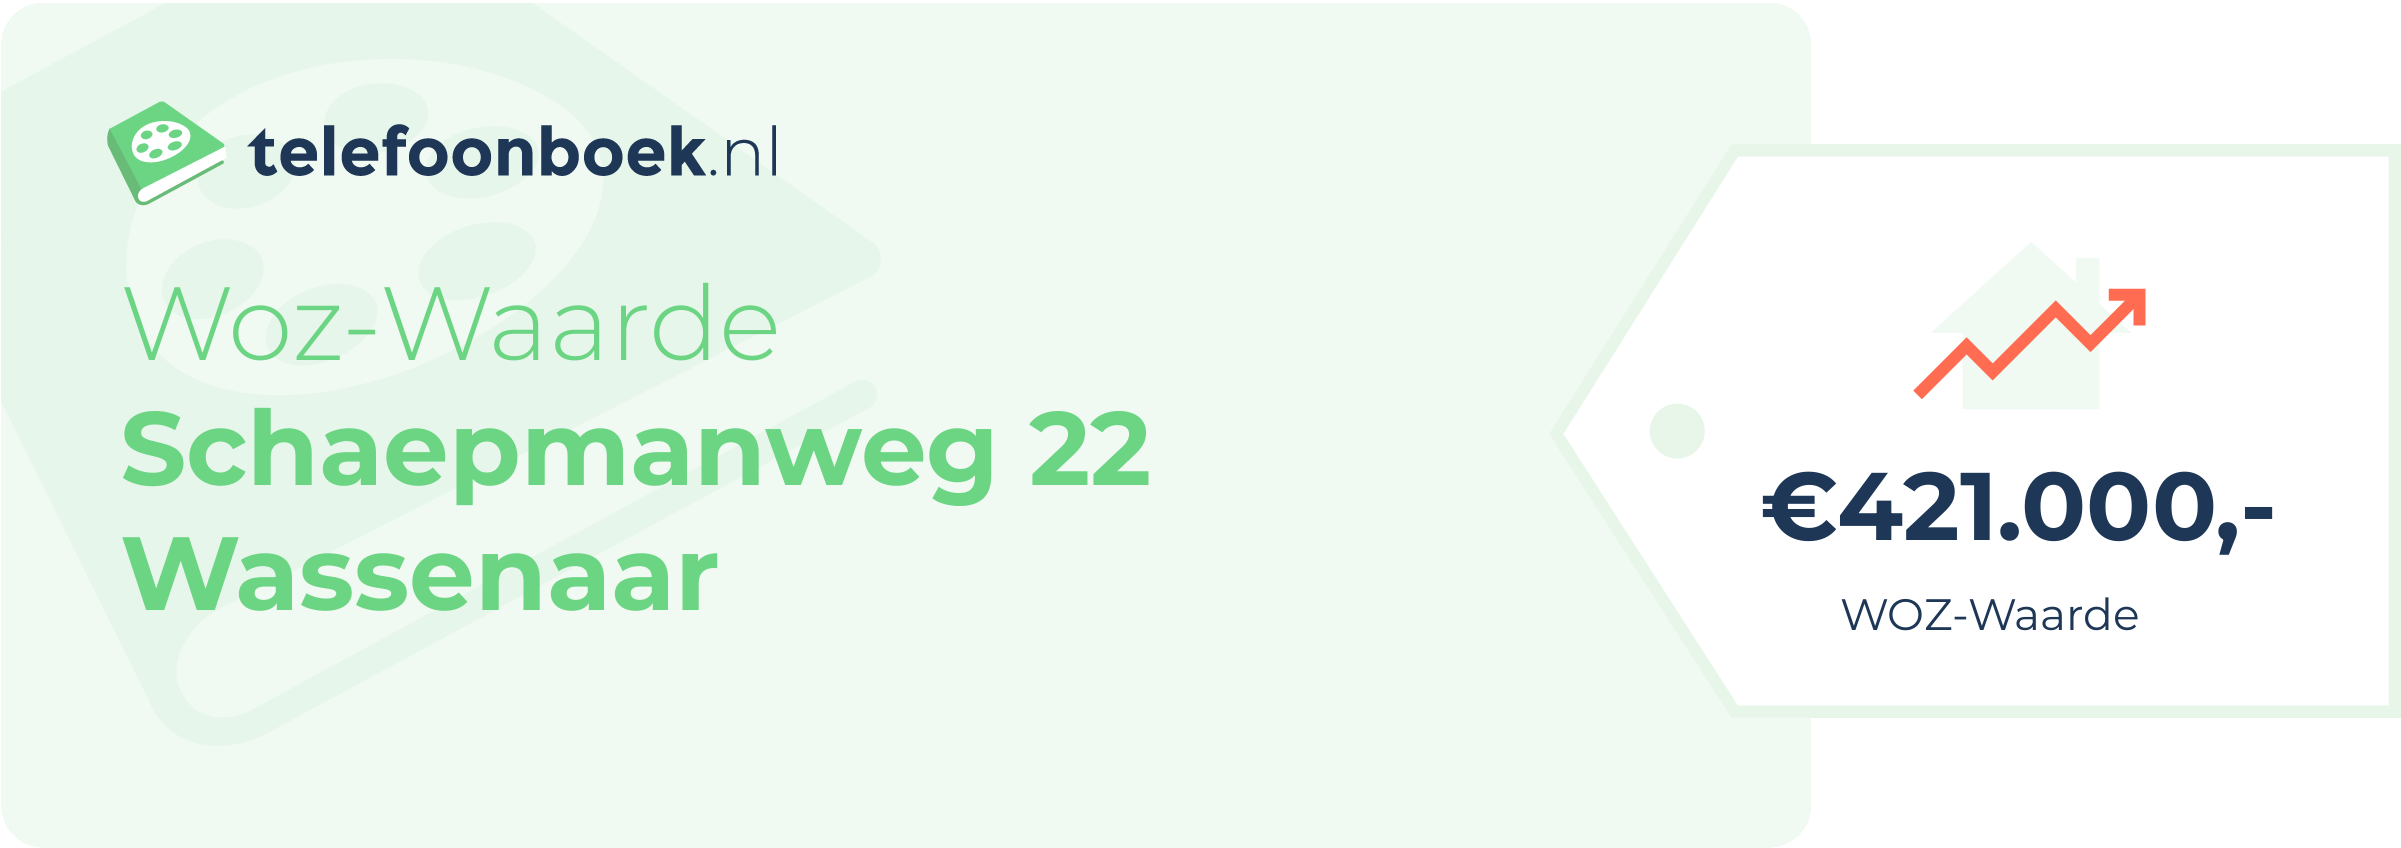 WOZ-waarde Schaepmanweg 22 Wassenaar